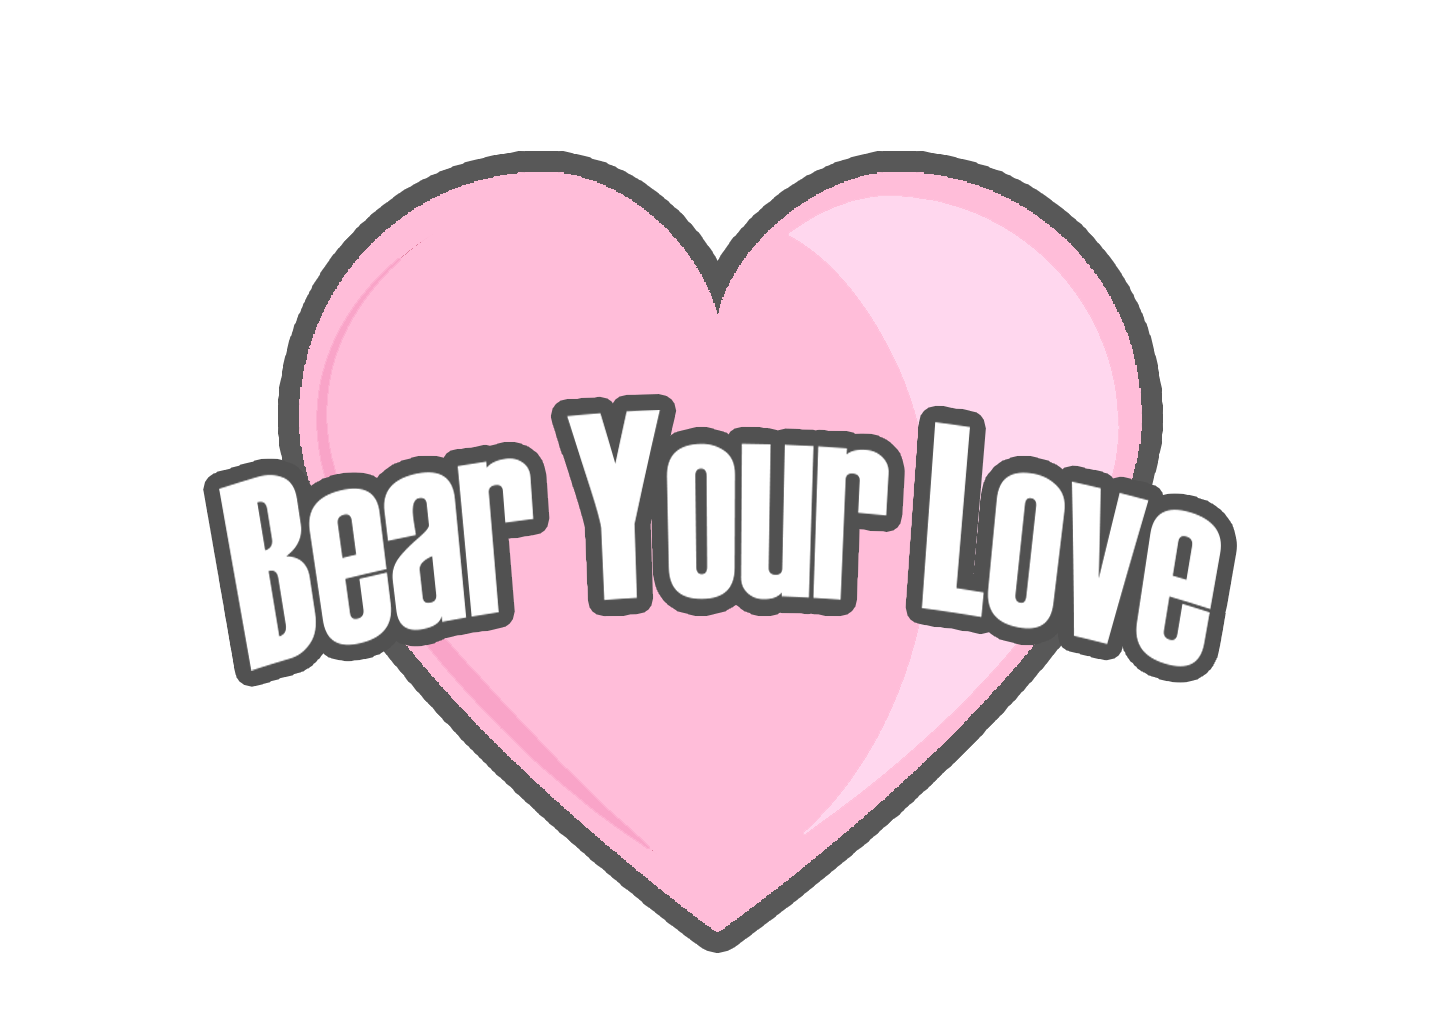 Bear Your Love